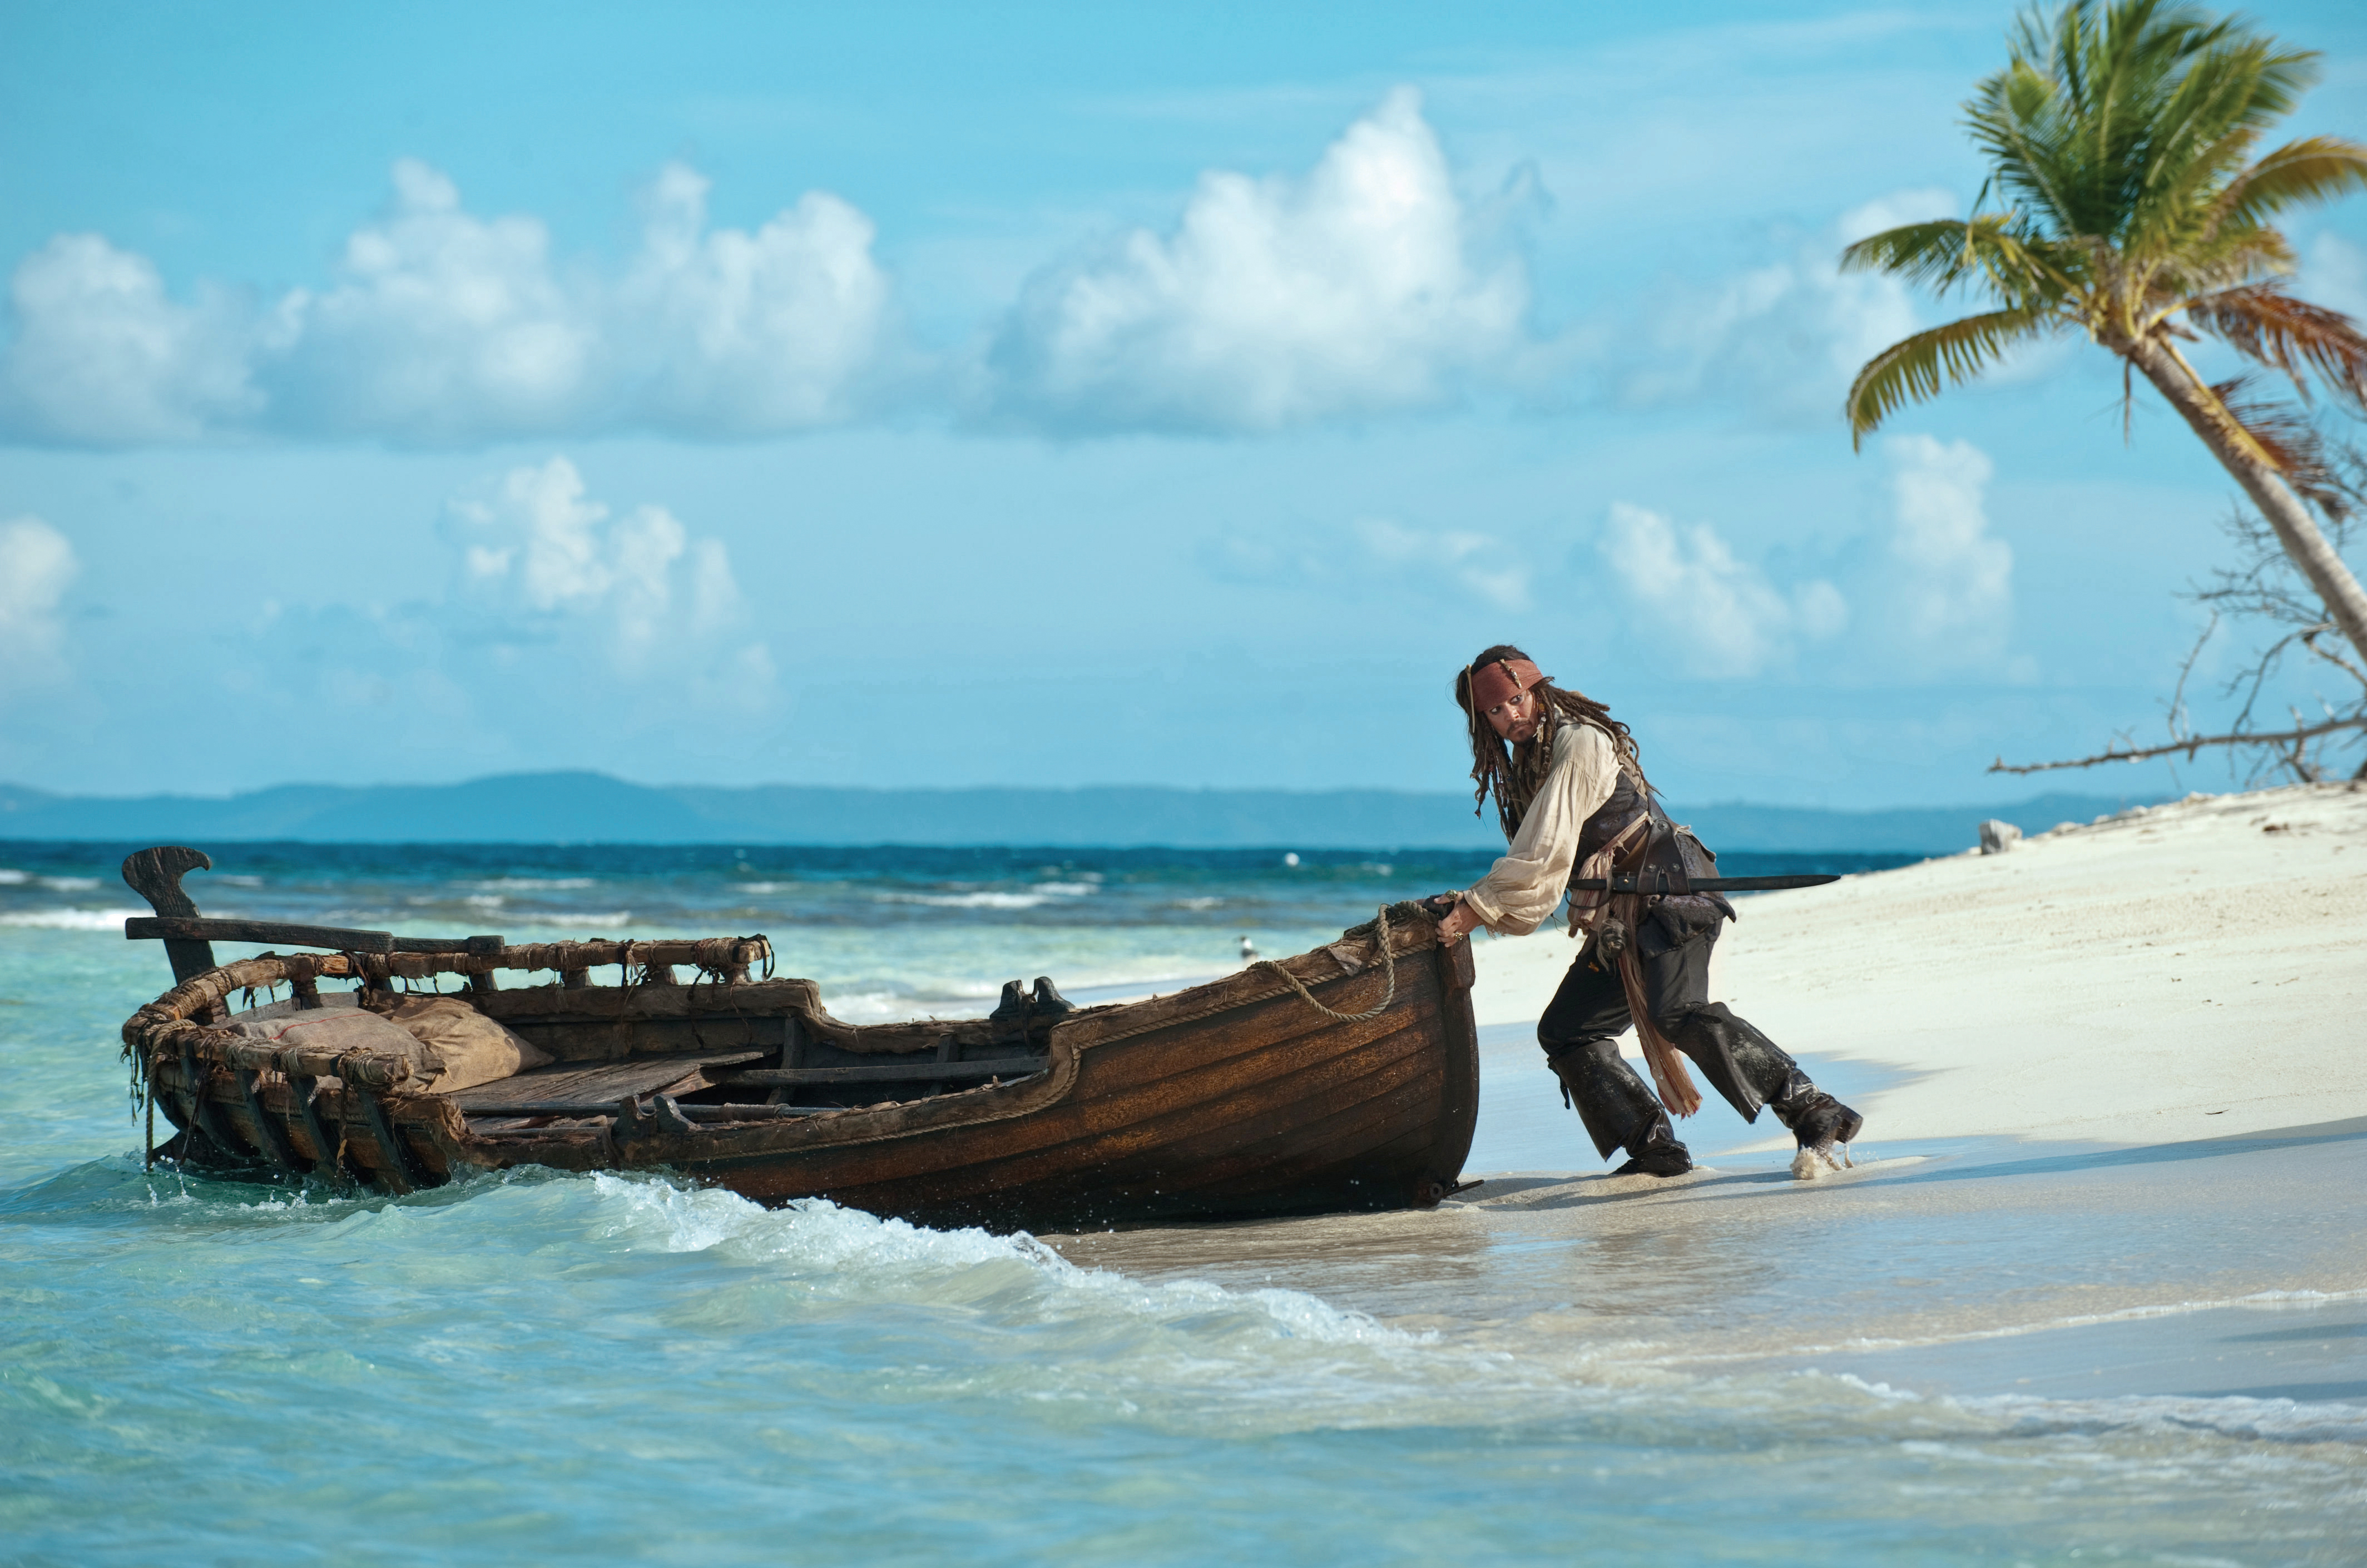 Pirates Of The Caribbean Desktop - HD Wallpaper 